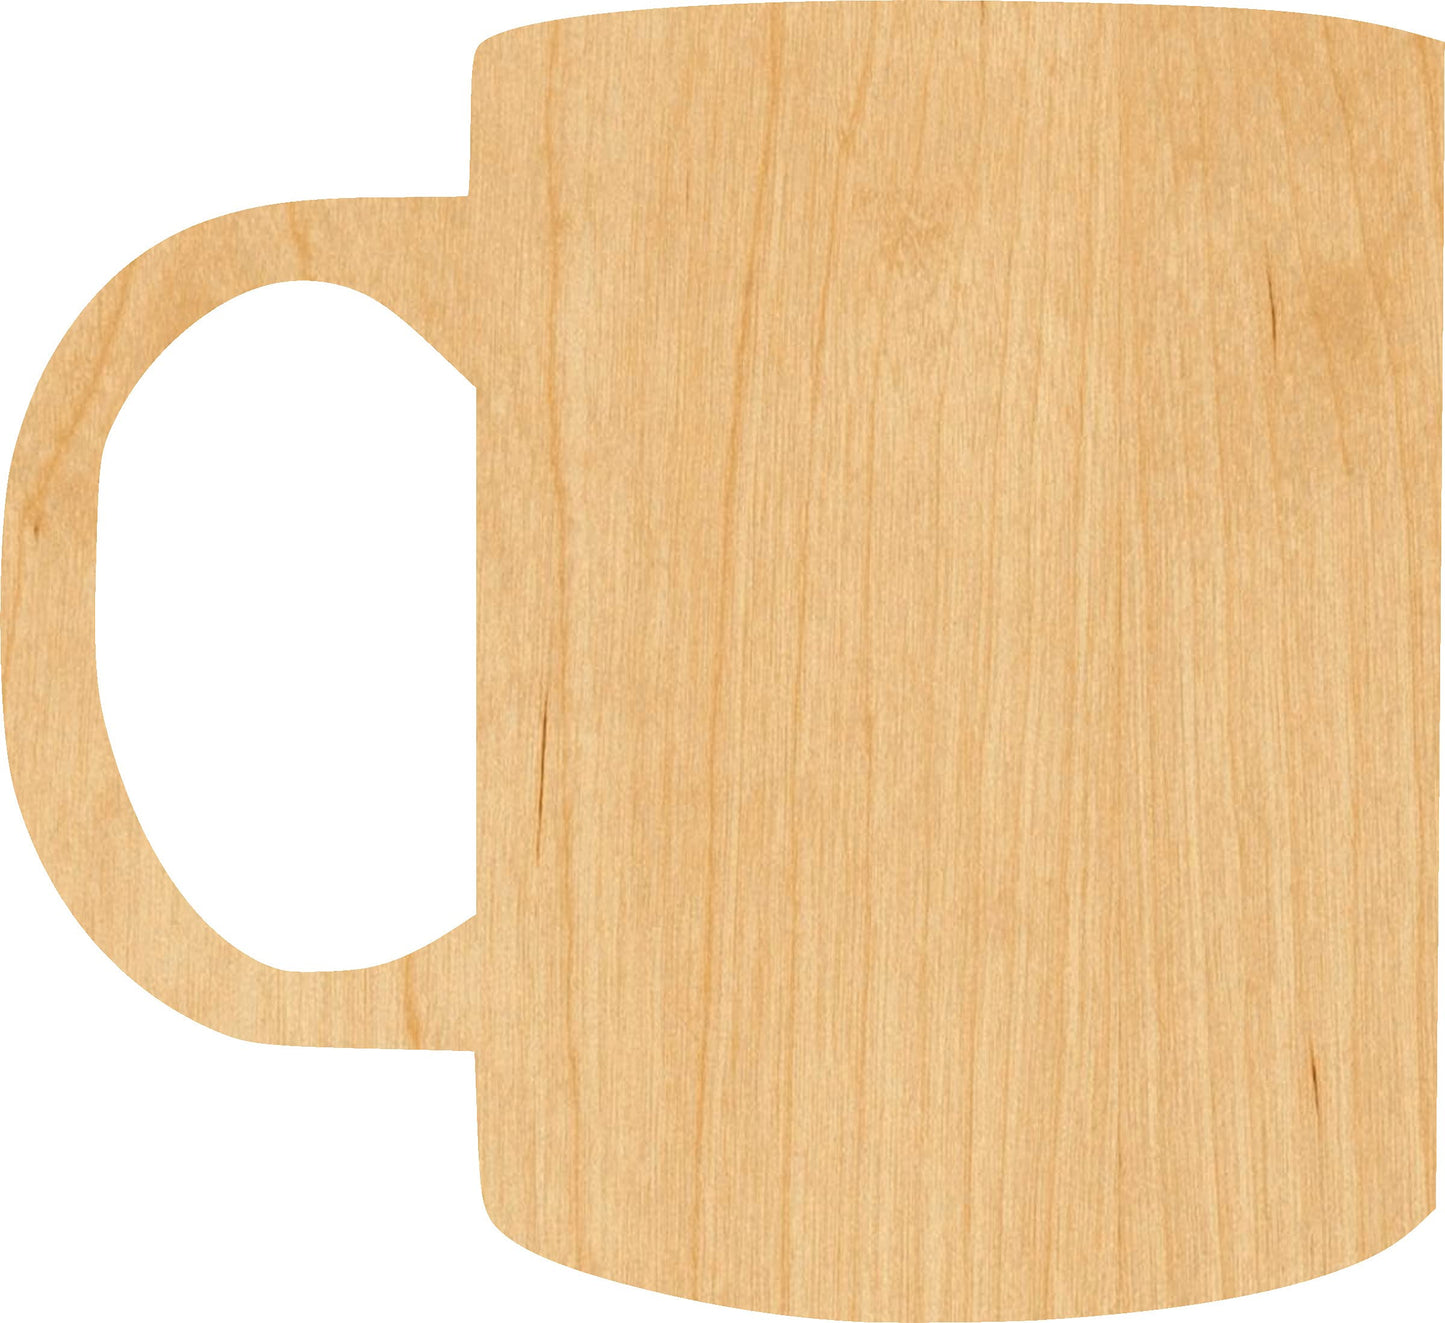 Coffee Mug Laser Cut Out Wood Shape Craft Supply - 2"